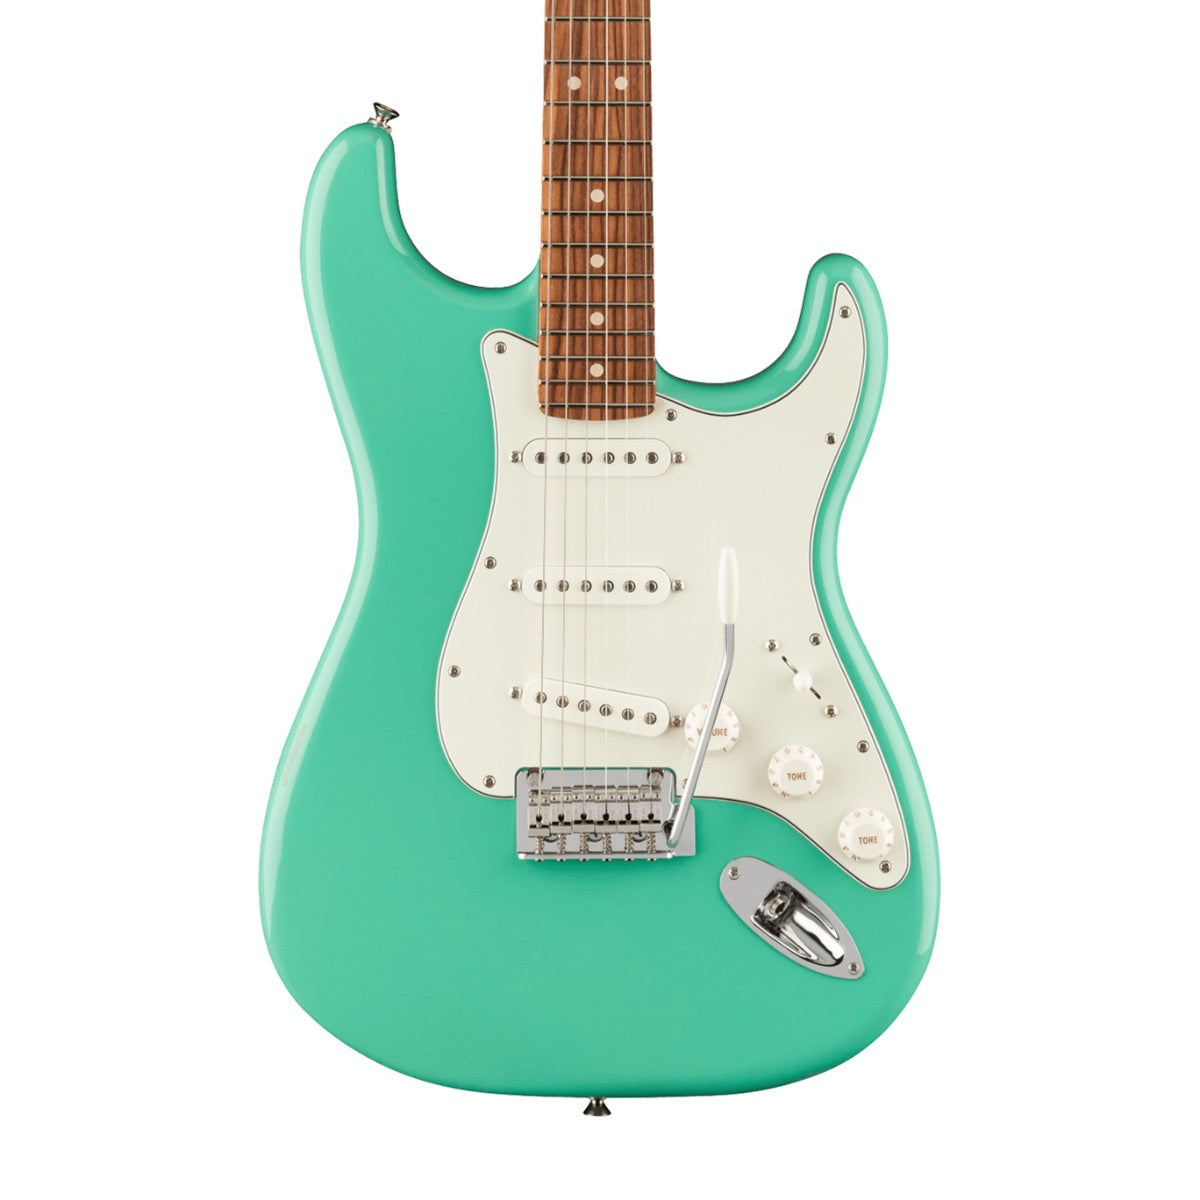 Fender Player Stratocaster - Sea Foam Green, View 1